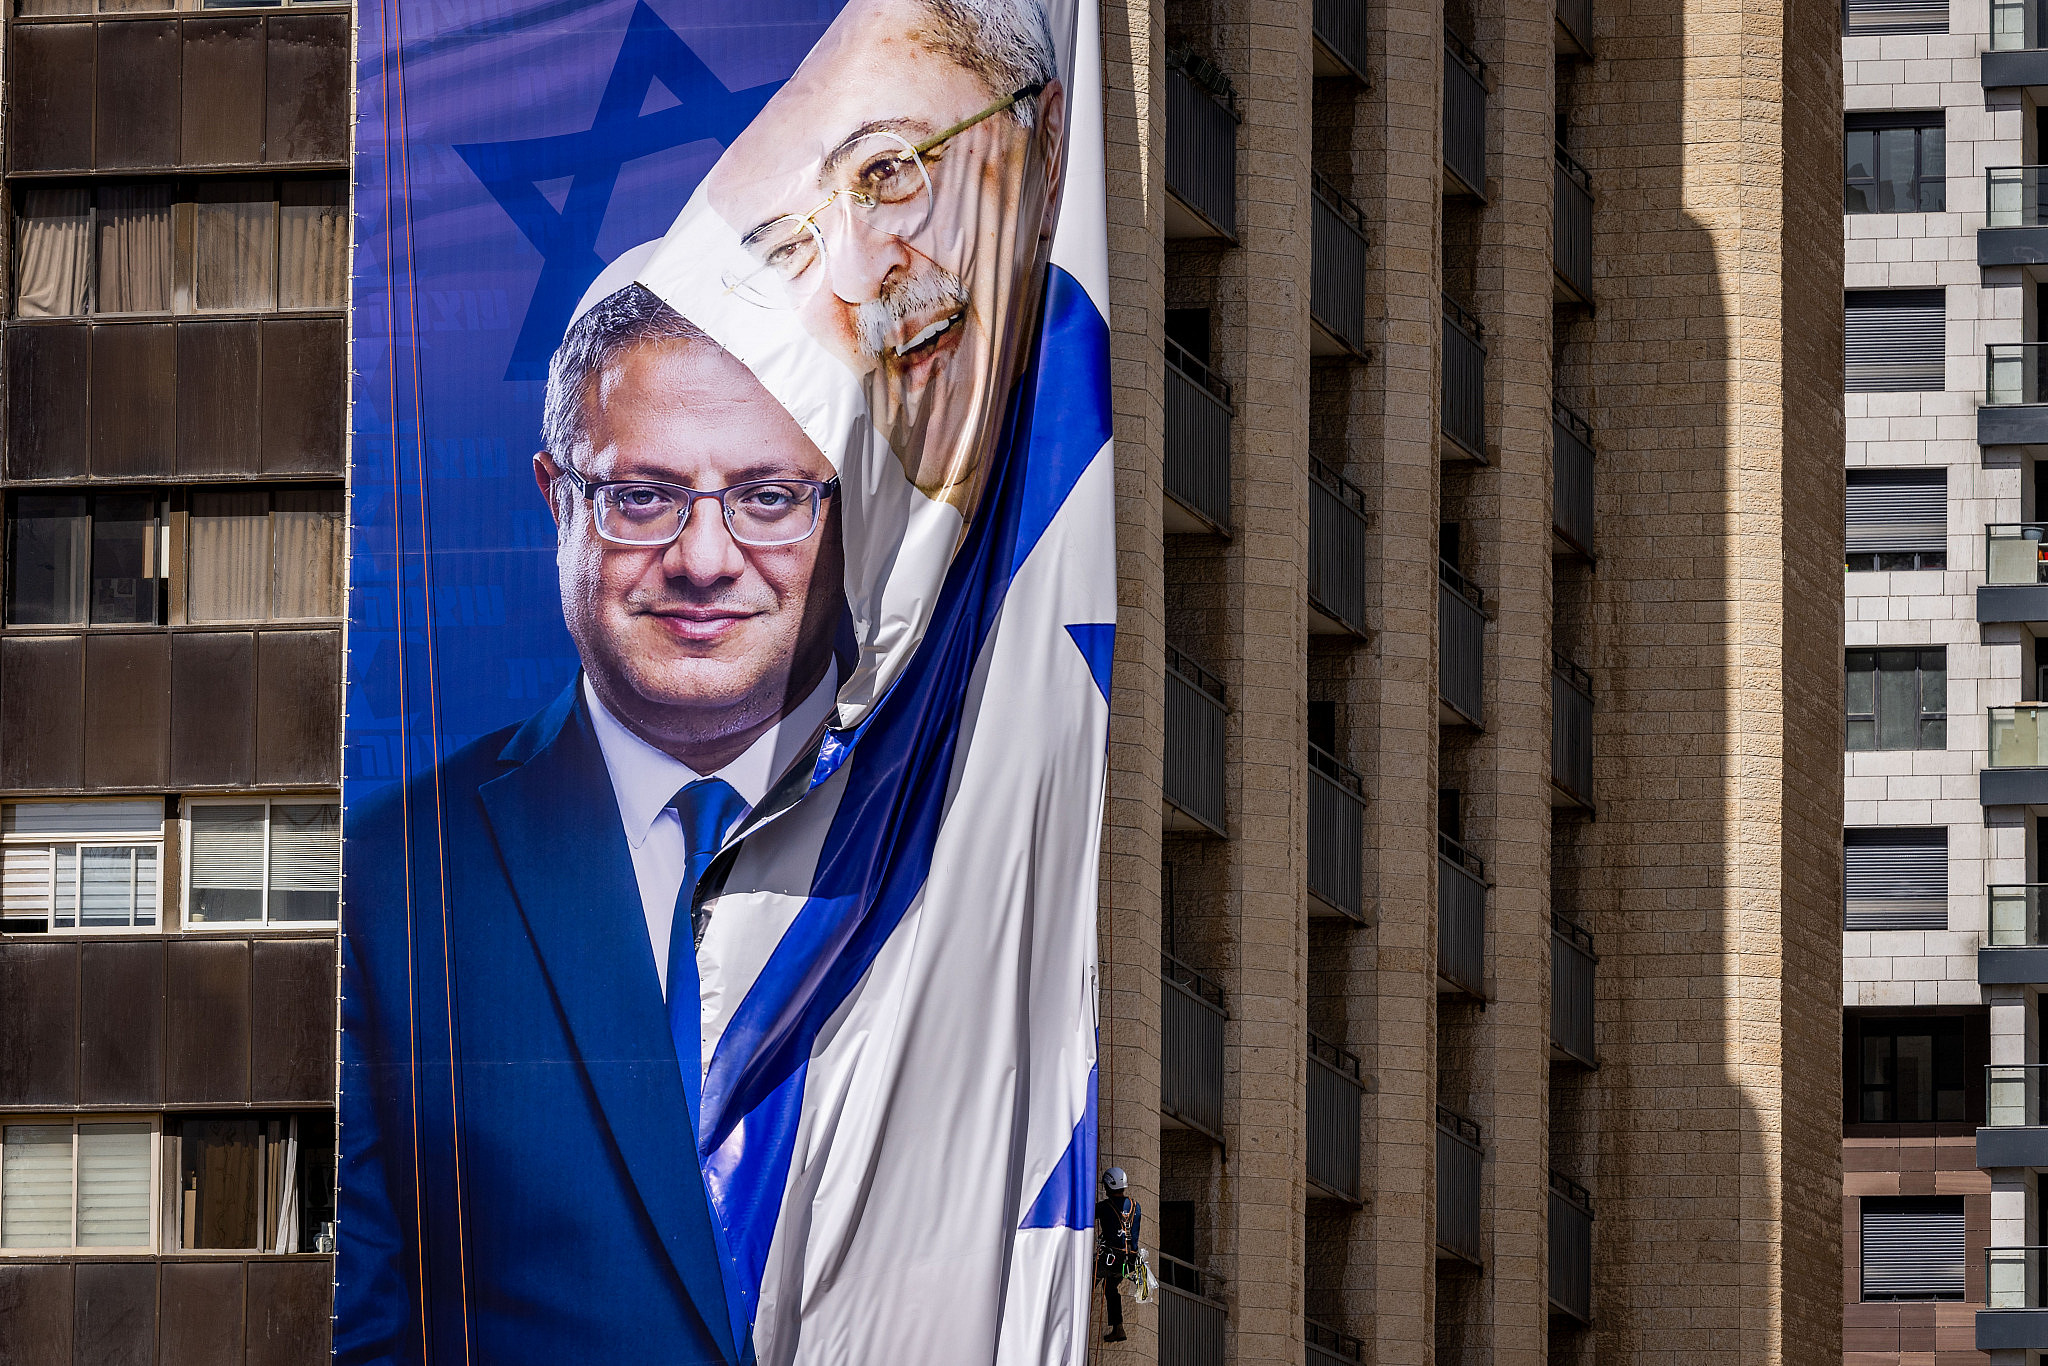 Workers hang a large election campaign poster of Otzma Yehudit head Itamar Ben Gvir and take down a poster of Arab MK Ahmad Tibi, in Jerusalem on September 29, 2022. (Yonatan Sindel/Flash90)